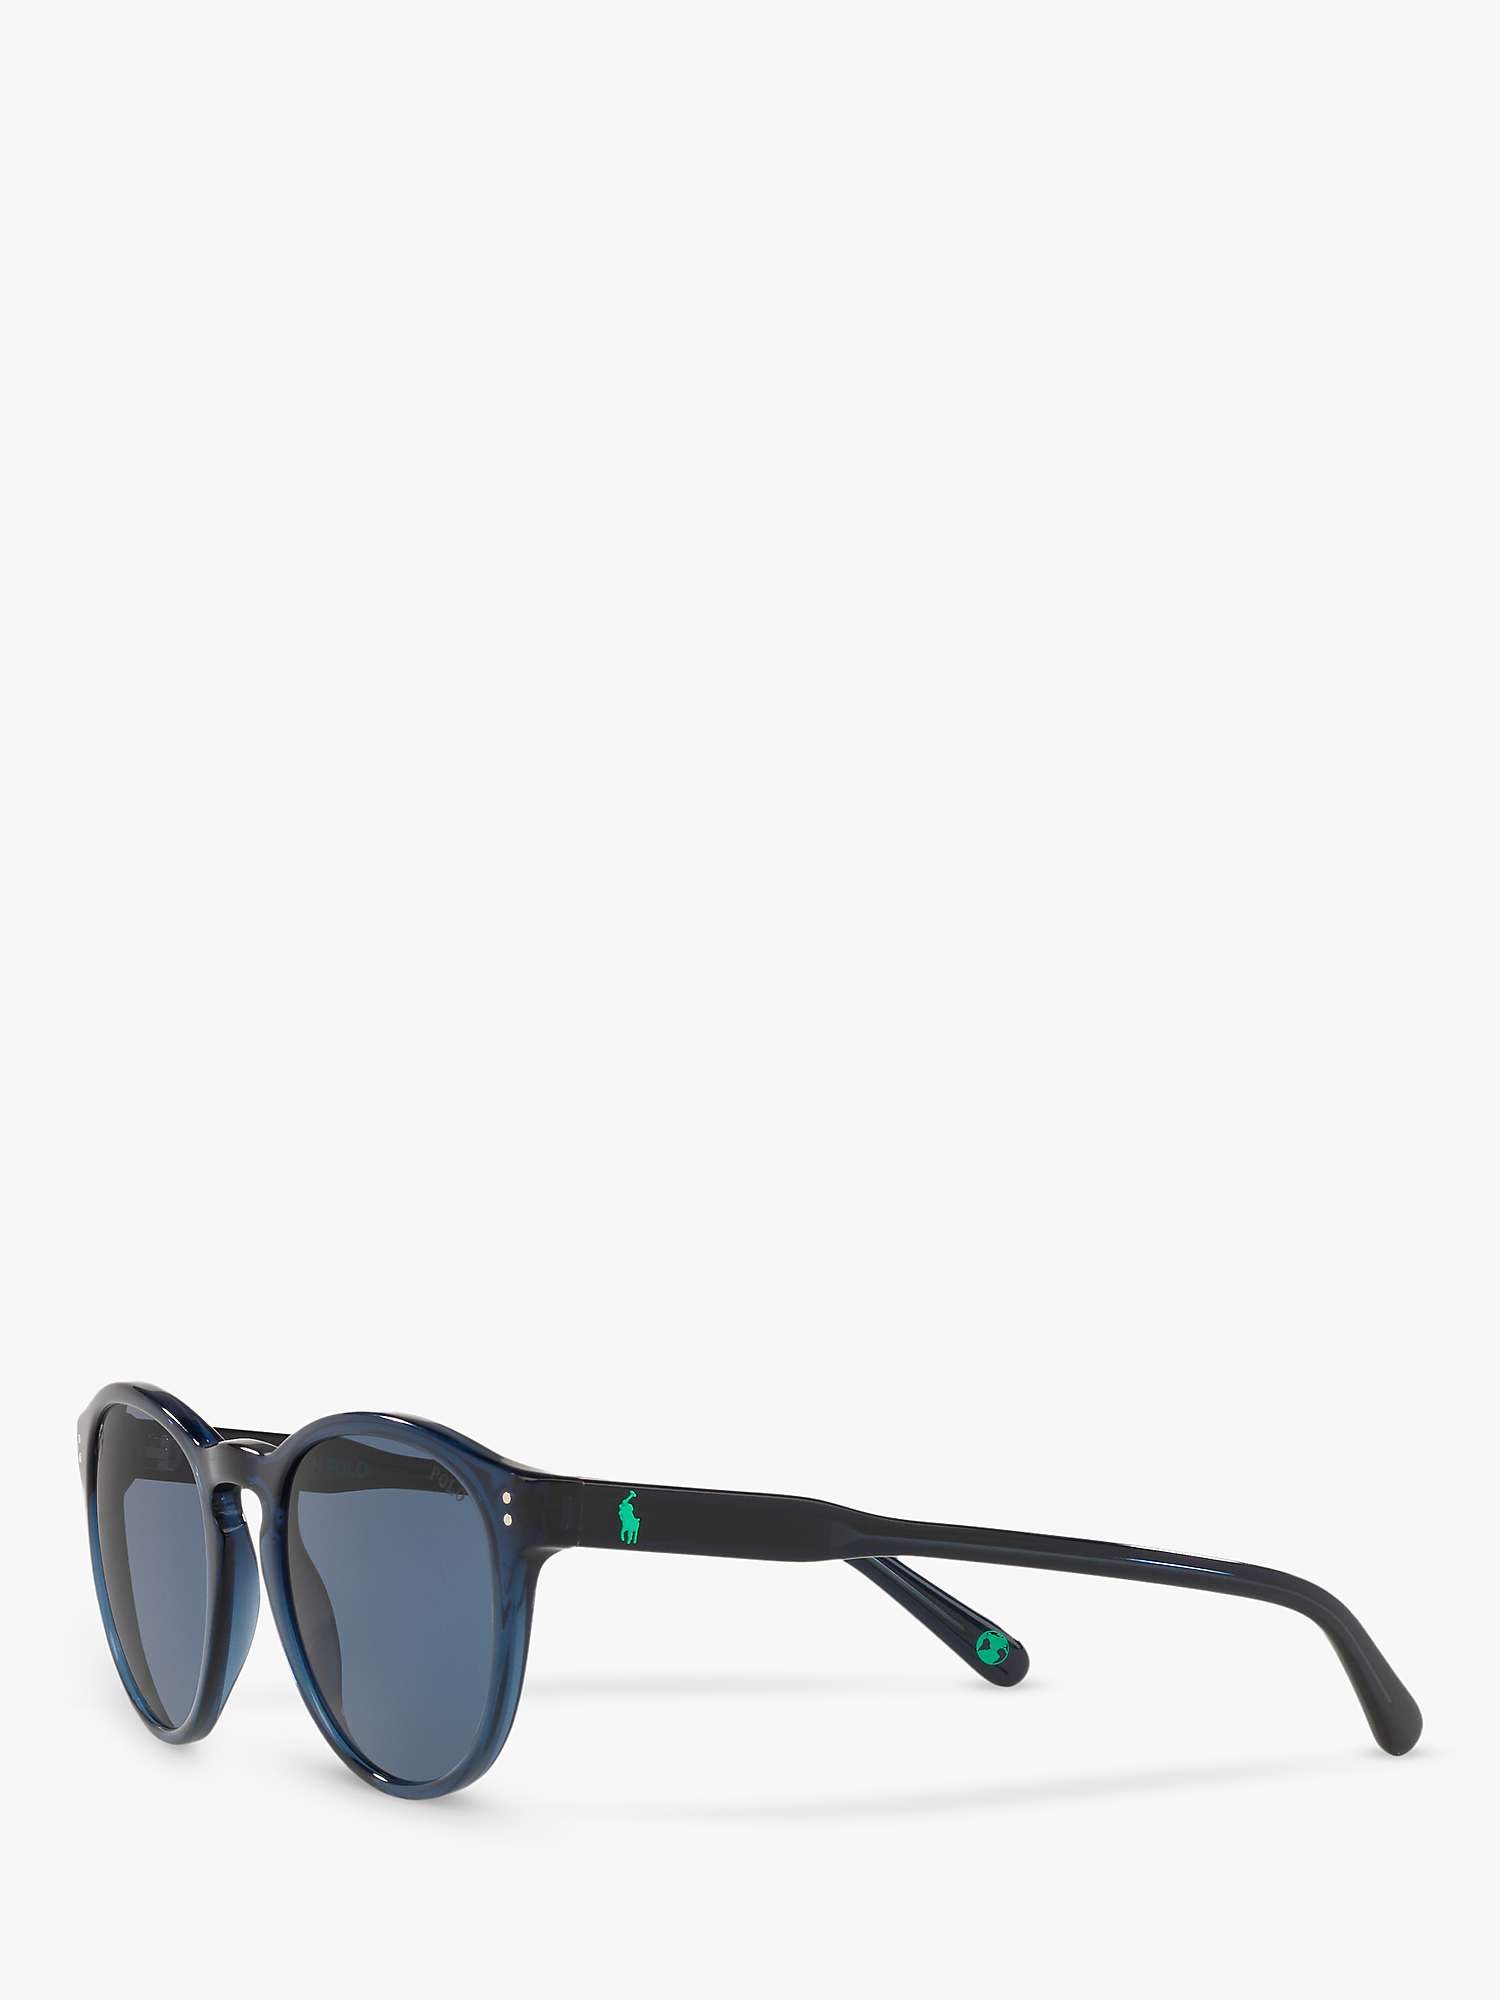 Buy Ralph Lauren PH4172 Men's Oval Sunglasses Online at johnlewis.com